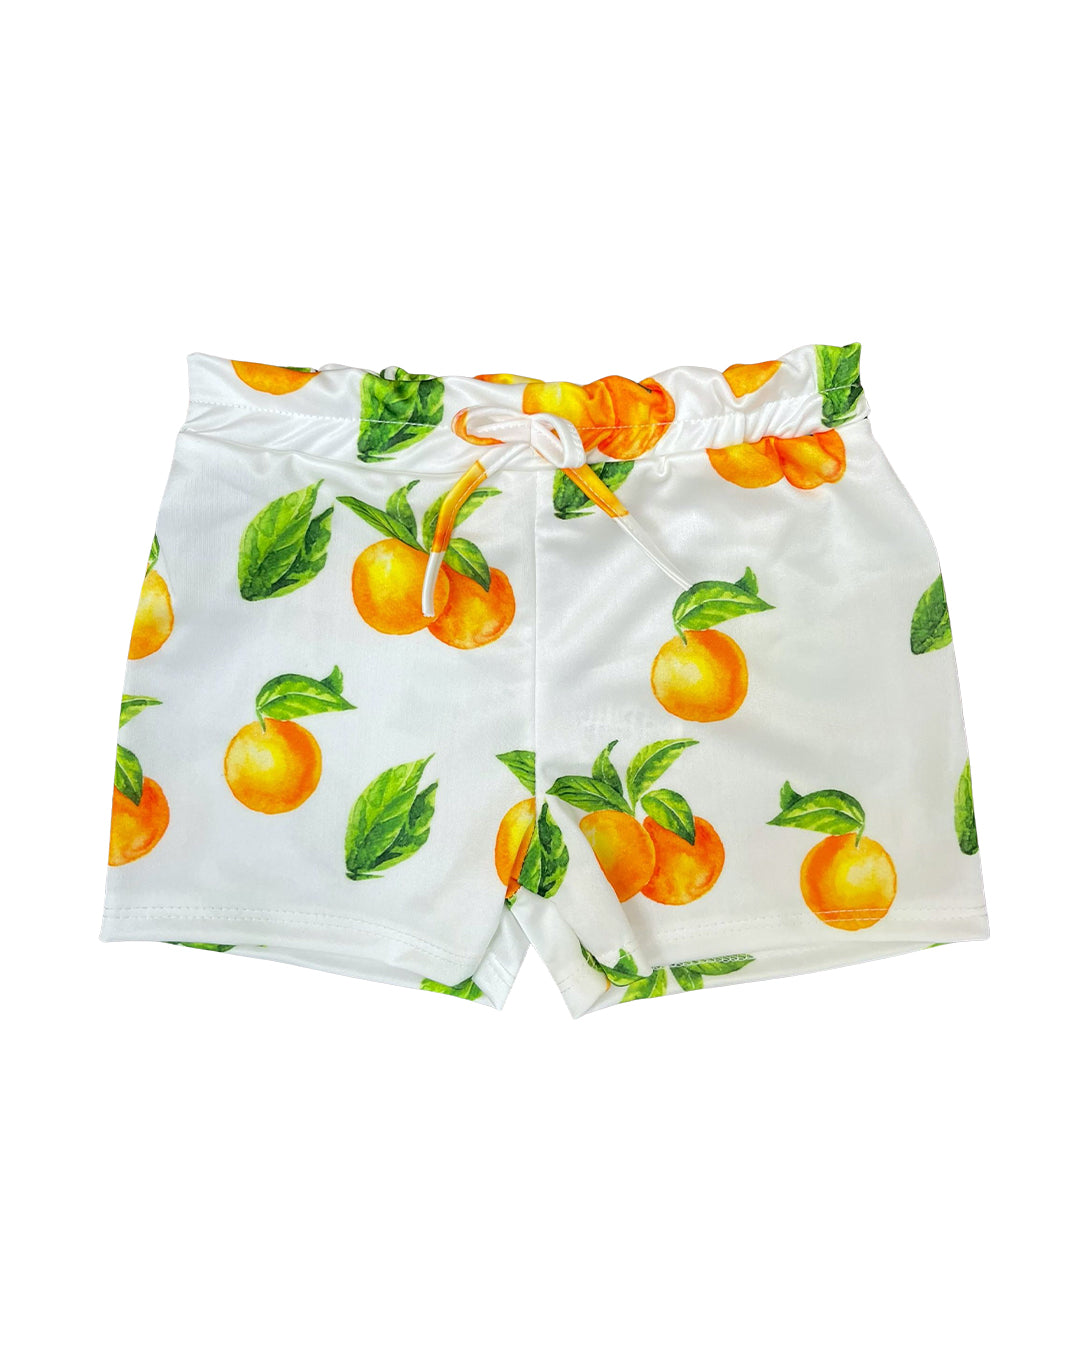 Orange Swimming Shorts/Trunks